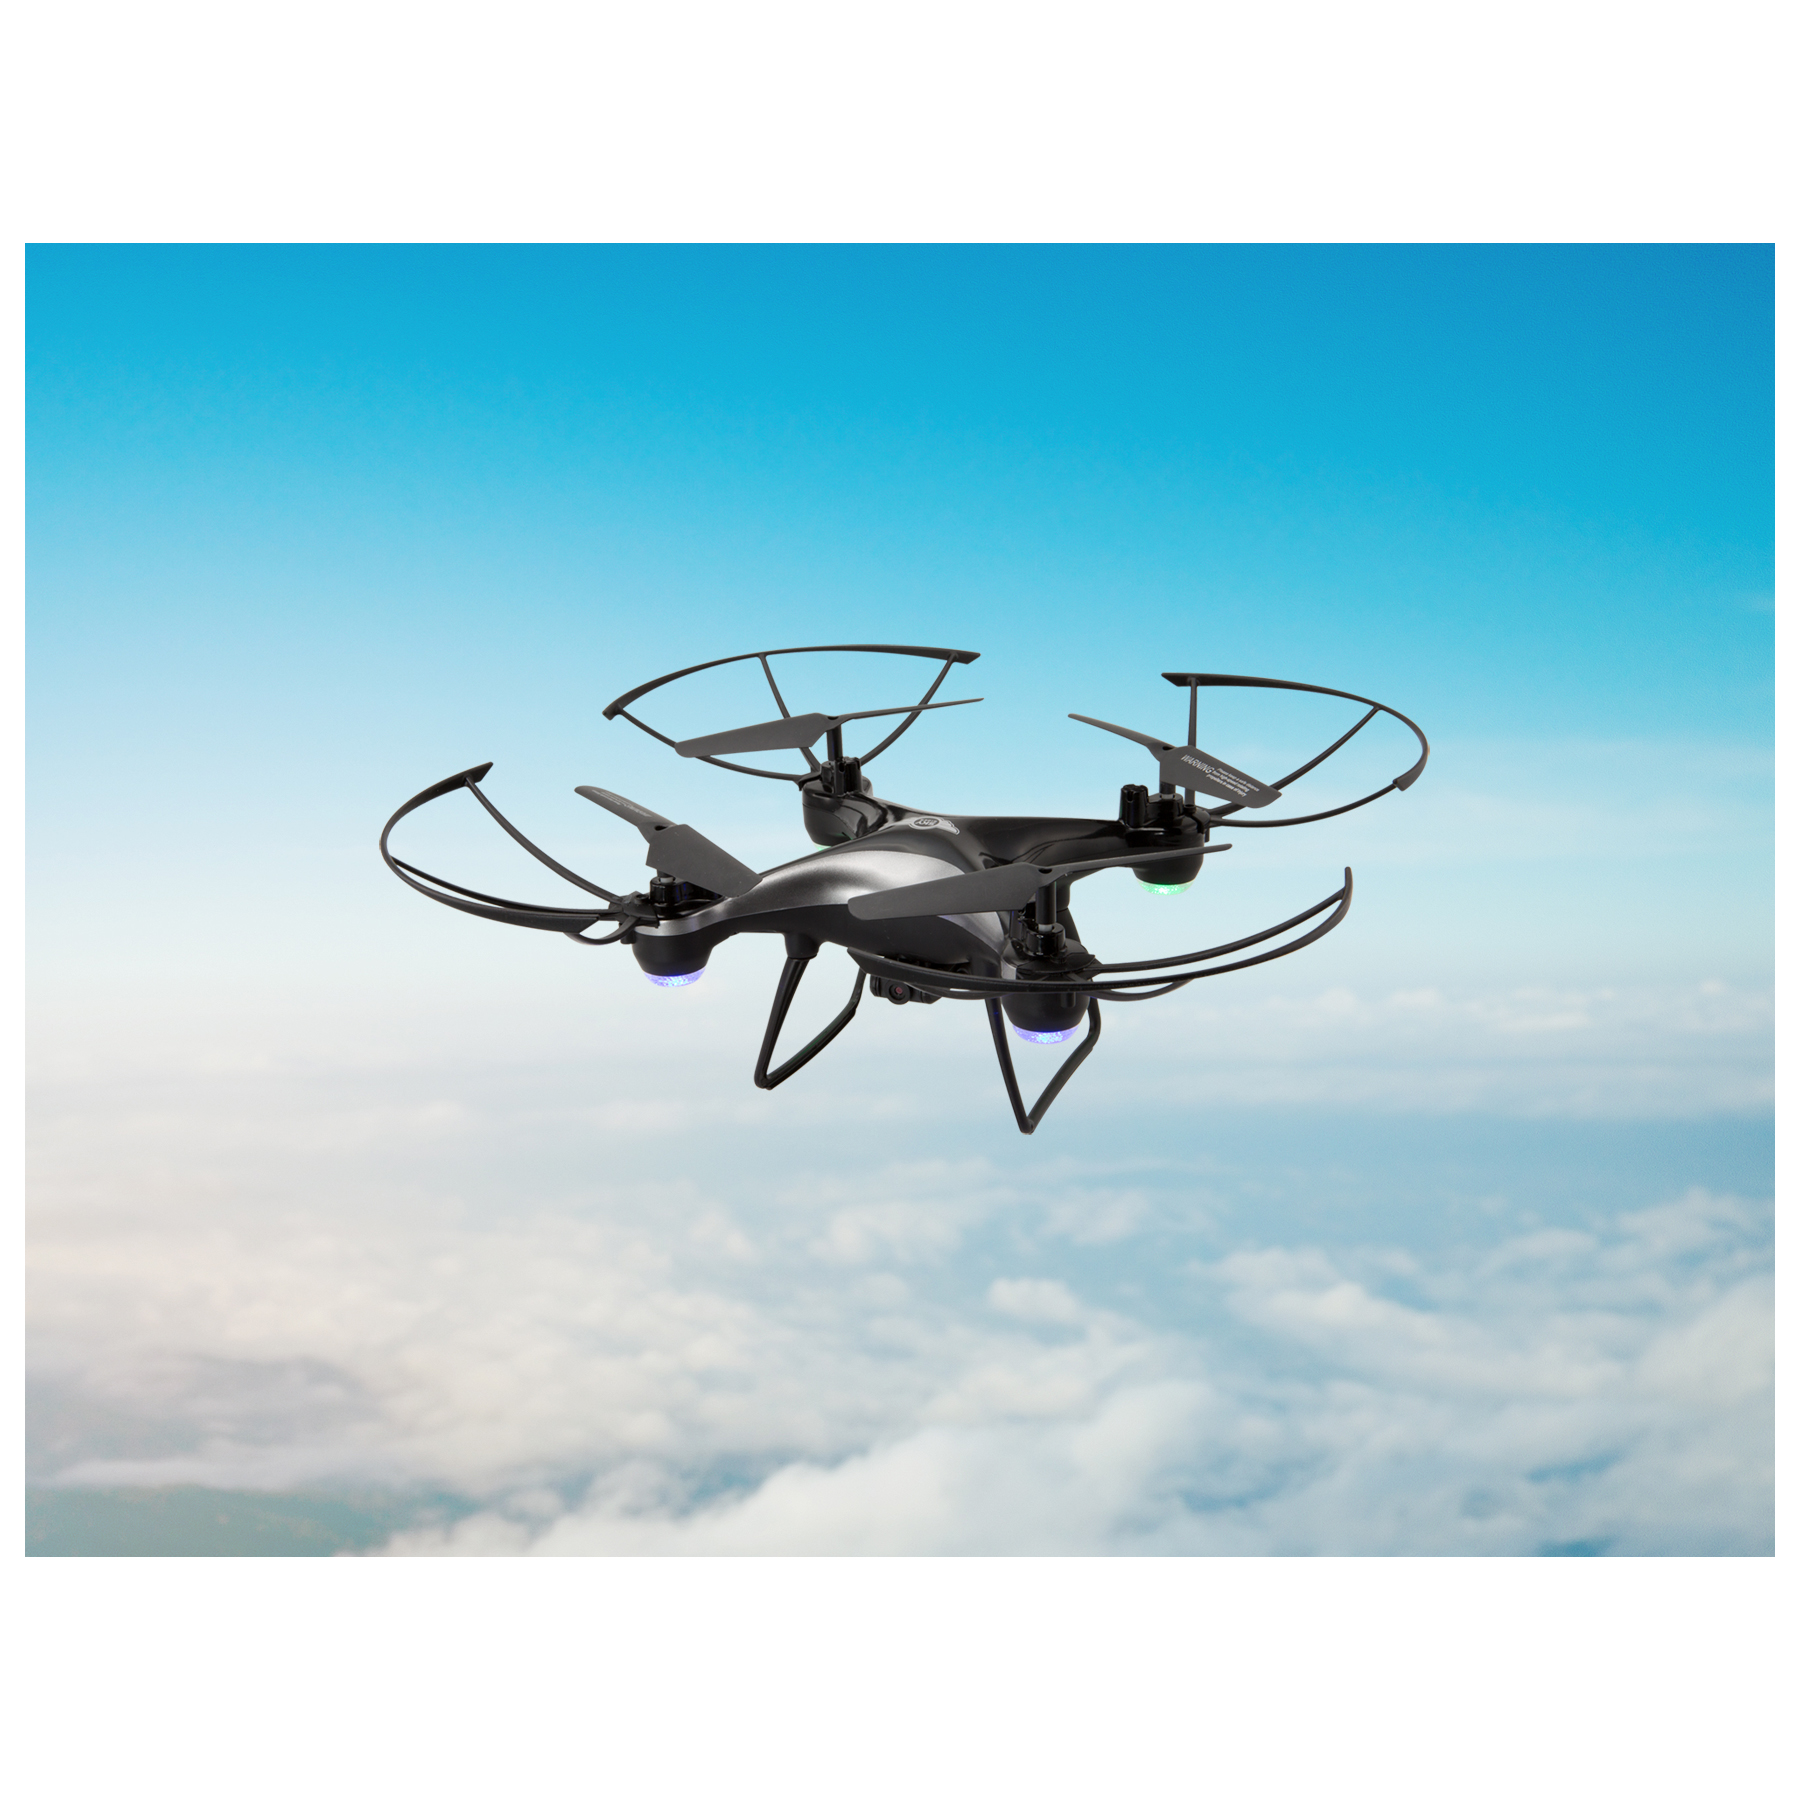 Sky Rider Thunderbird Quadcopter Drone with Wi-Fi Camera, DRW389, Black - image 3 of 5